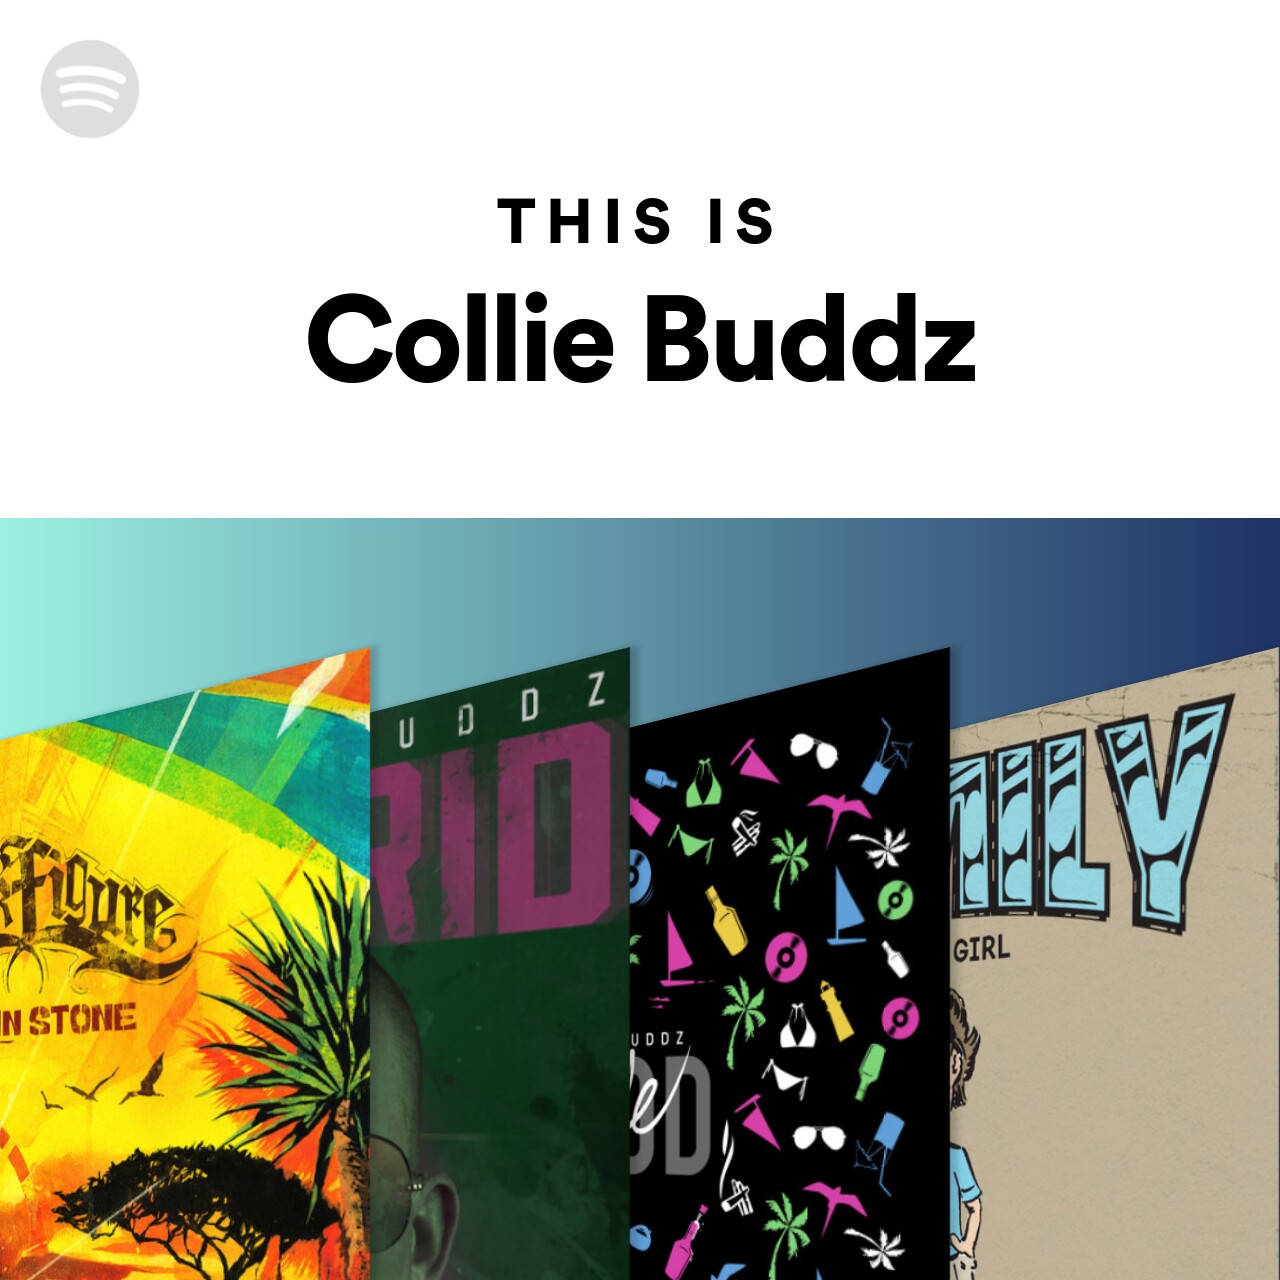 collie buddz tour playlist sunset